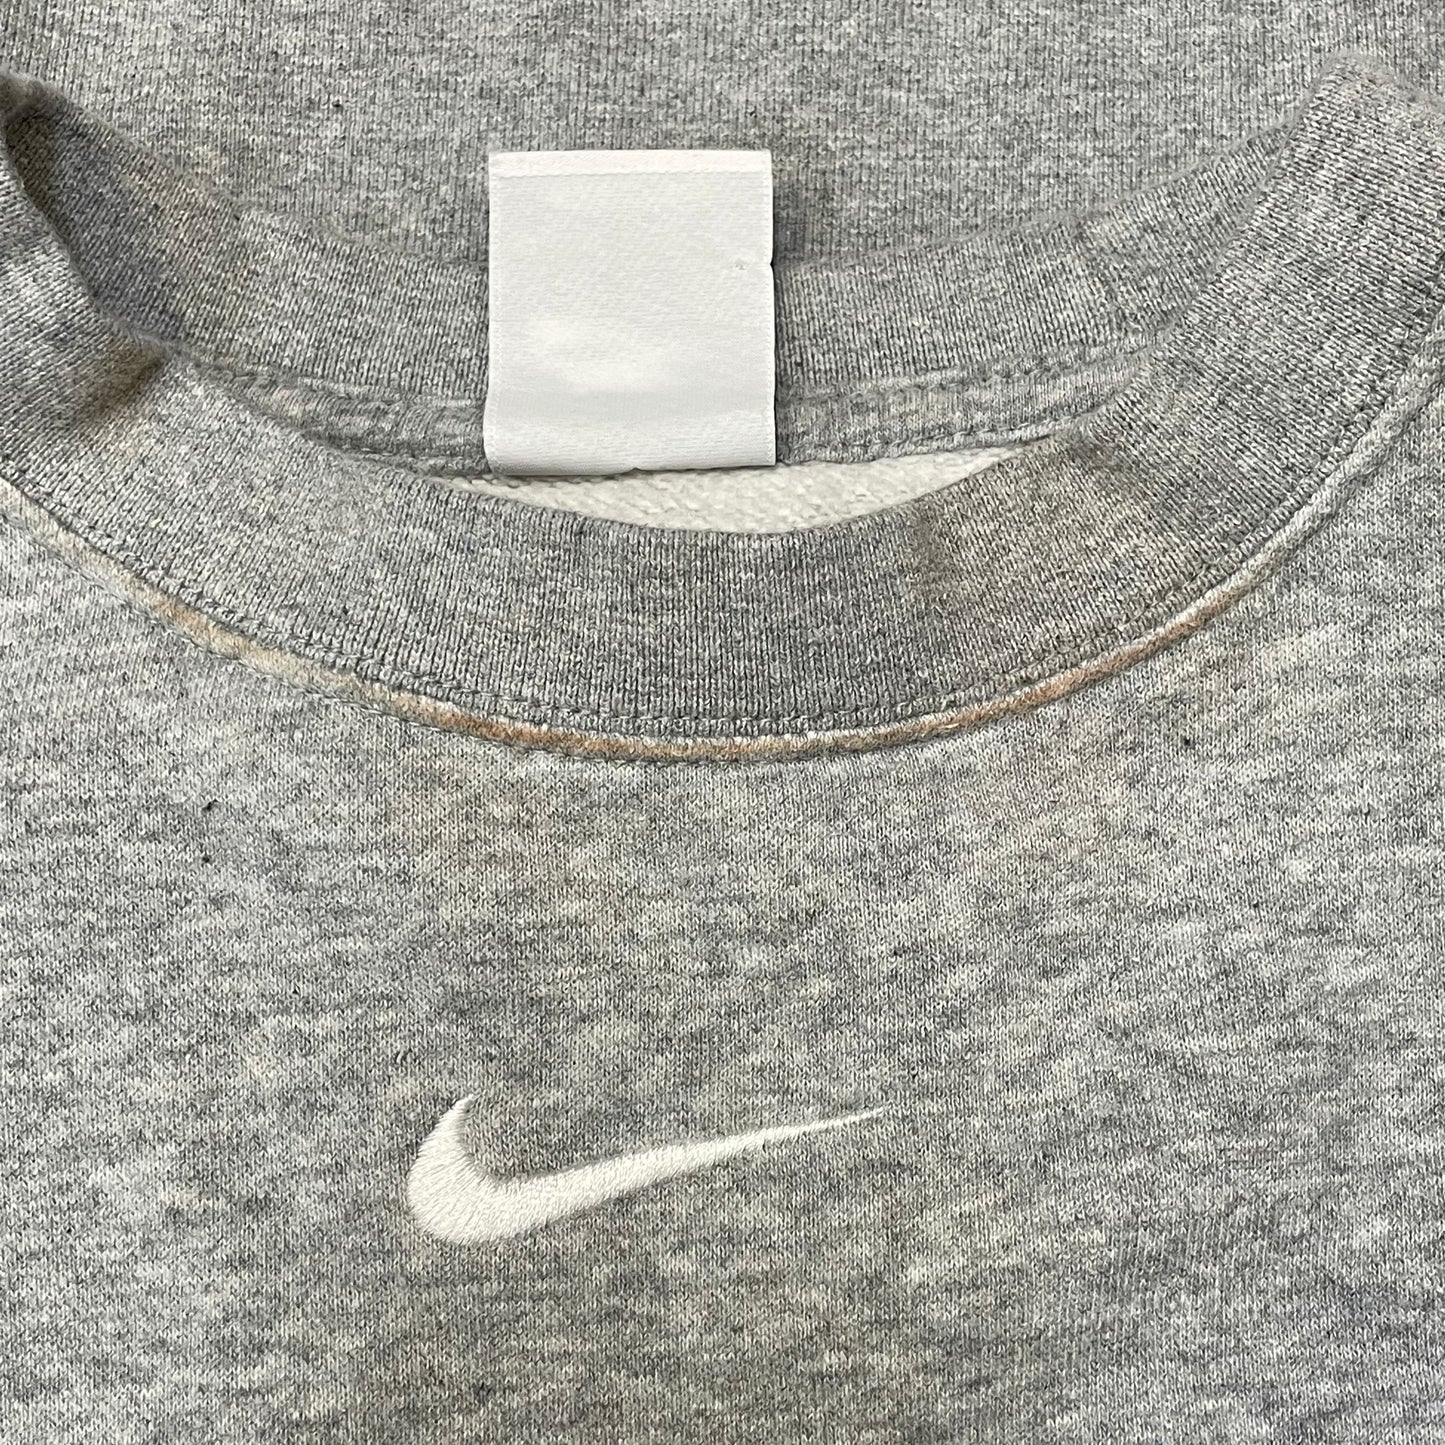 Athletic Sweatshirt Crewneck By Nike Apparel  Size: Xs